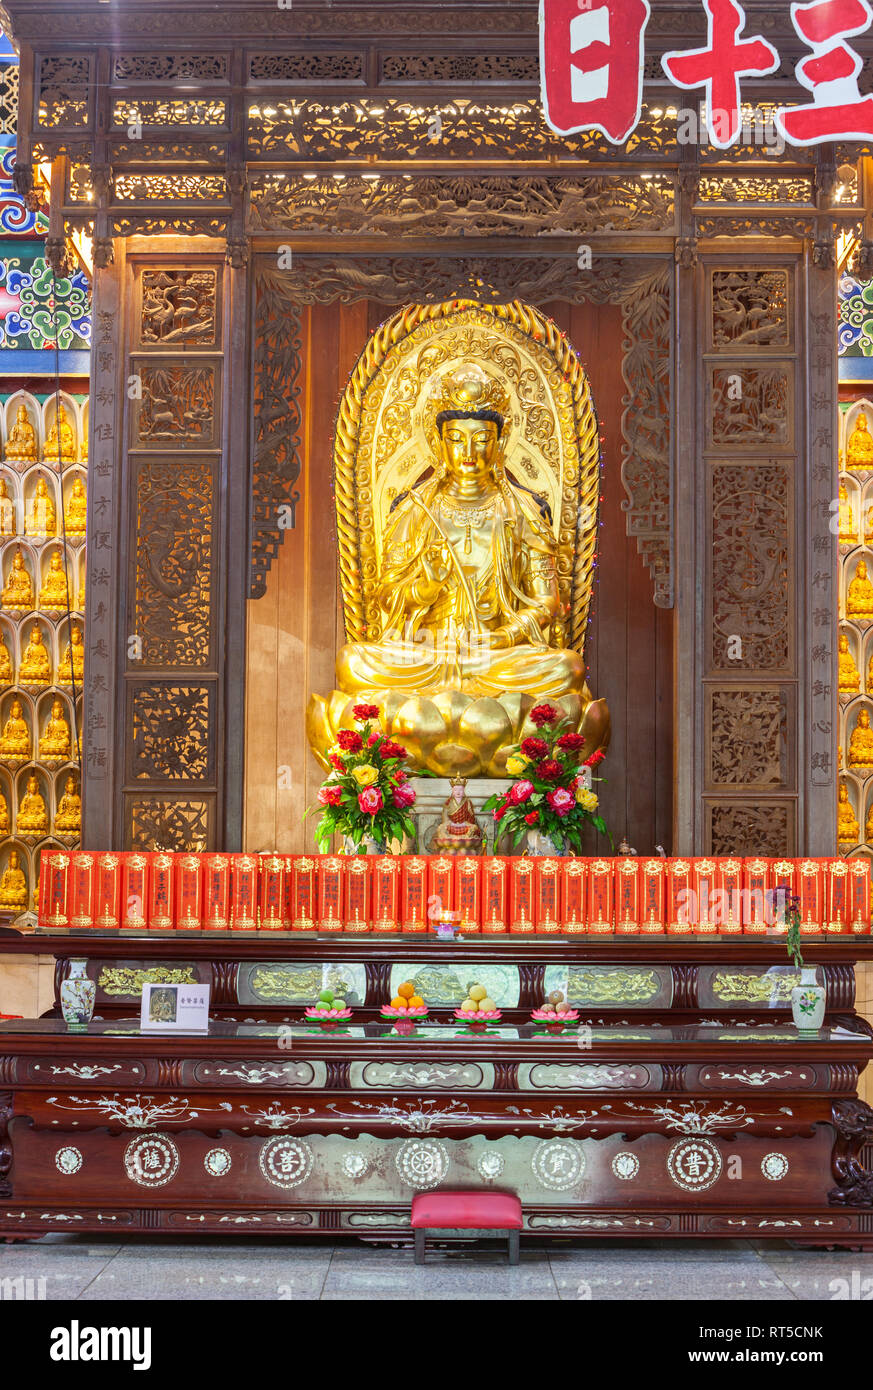 Shrine to Samantabhadra, Bodhisattva of Practice and Meditation,  Kek Lok Si Buddhist Temple, George Town, Penang, Malaysia. Stock Photo